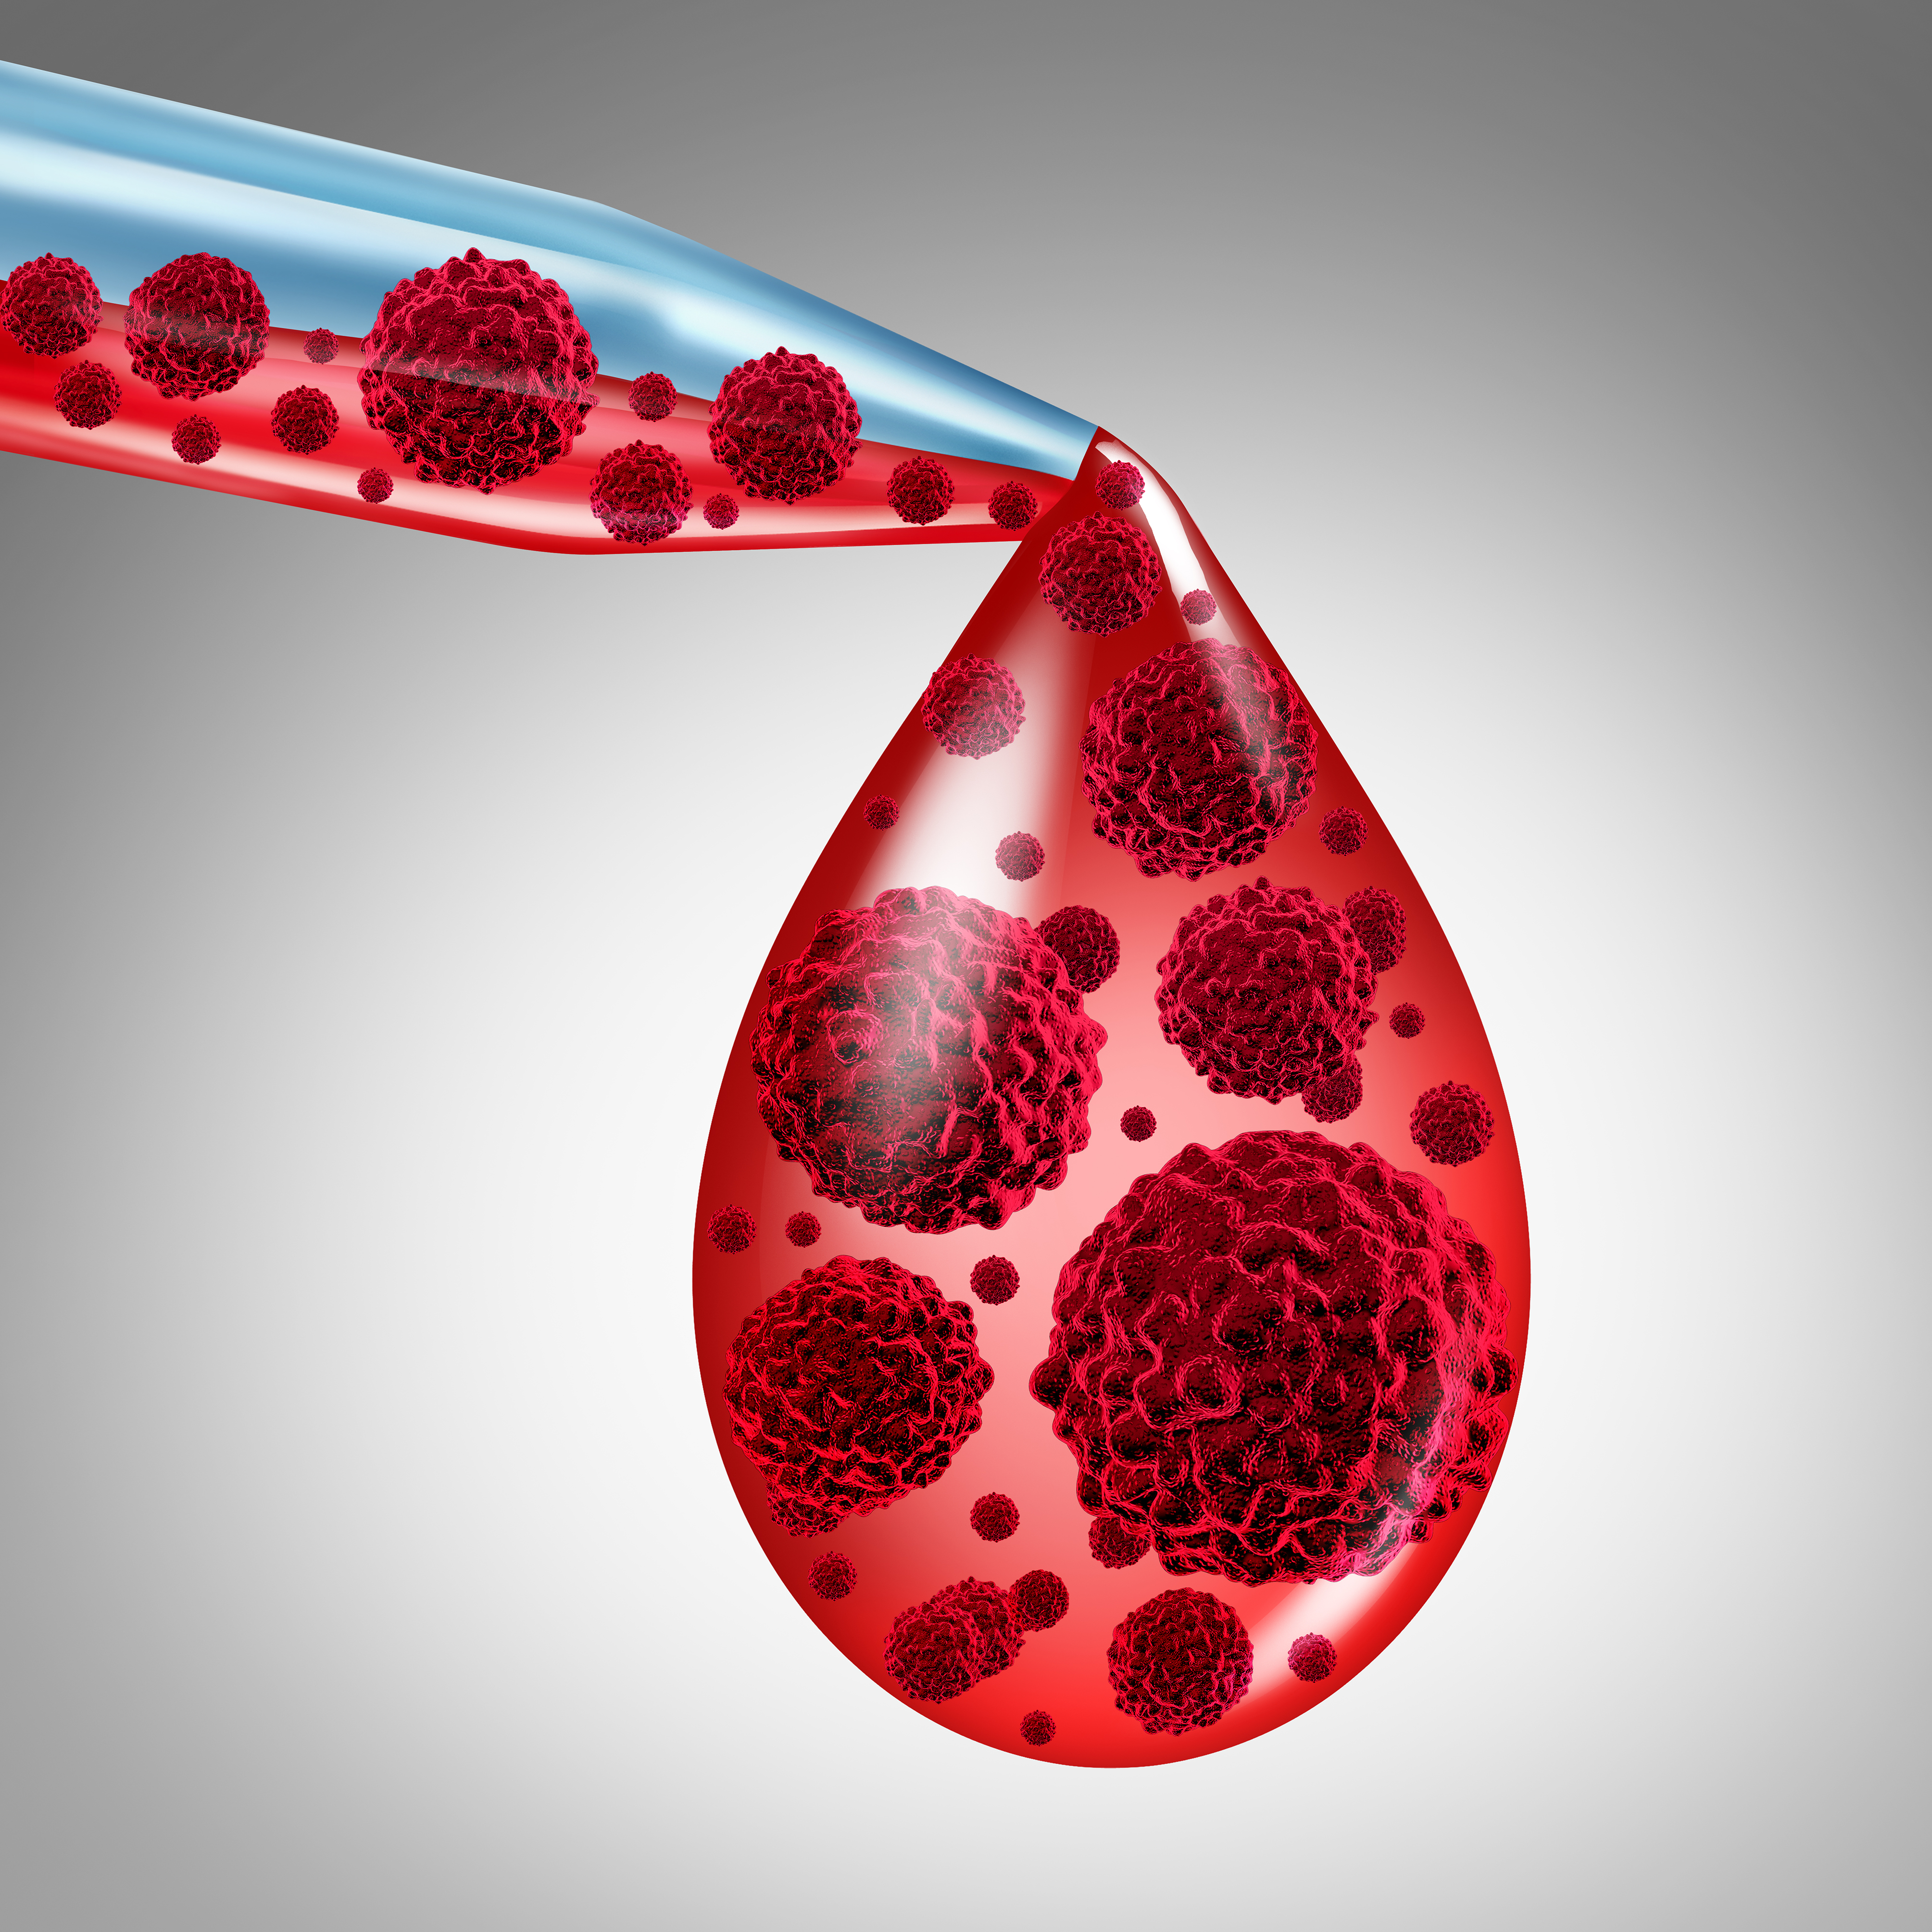 【Leukemia】PD-L1和<font color="red">IDO</font>1高表达与NK/T细胞淋巴瘤生存不佳相关